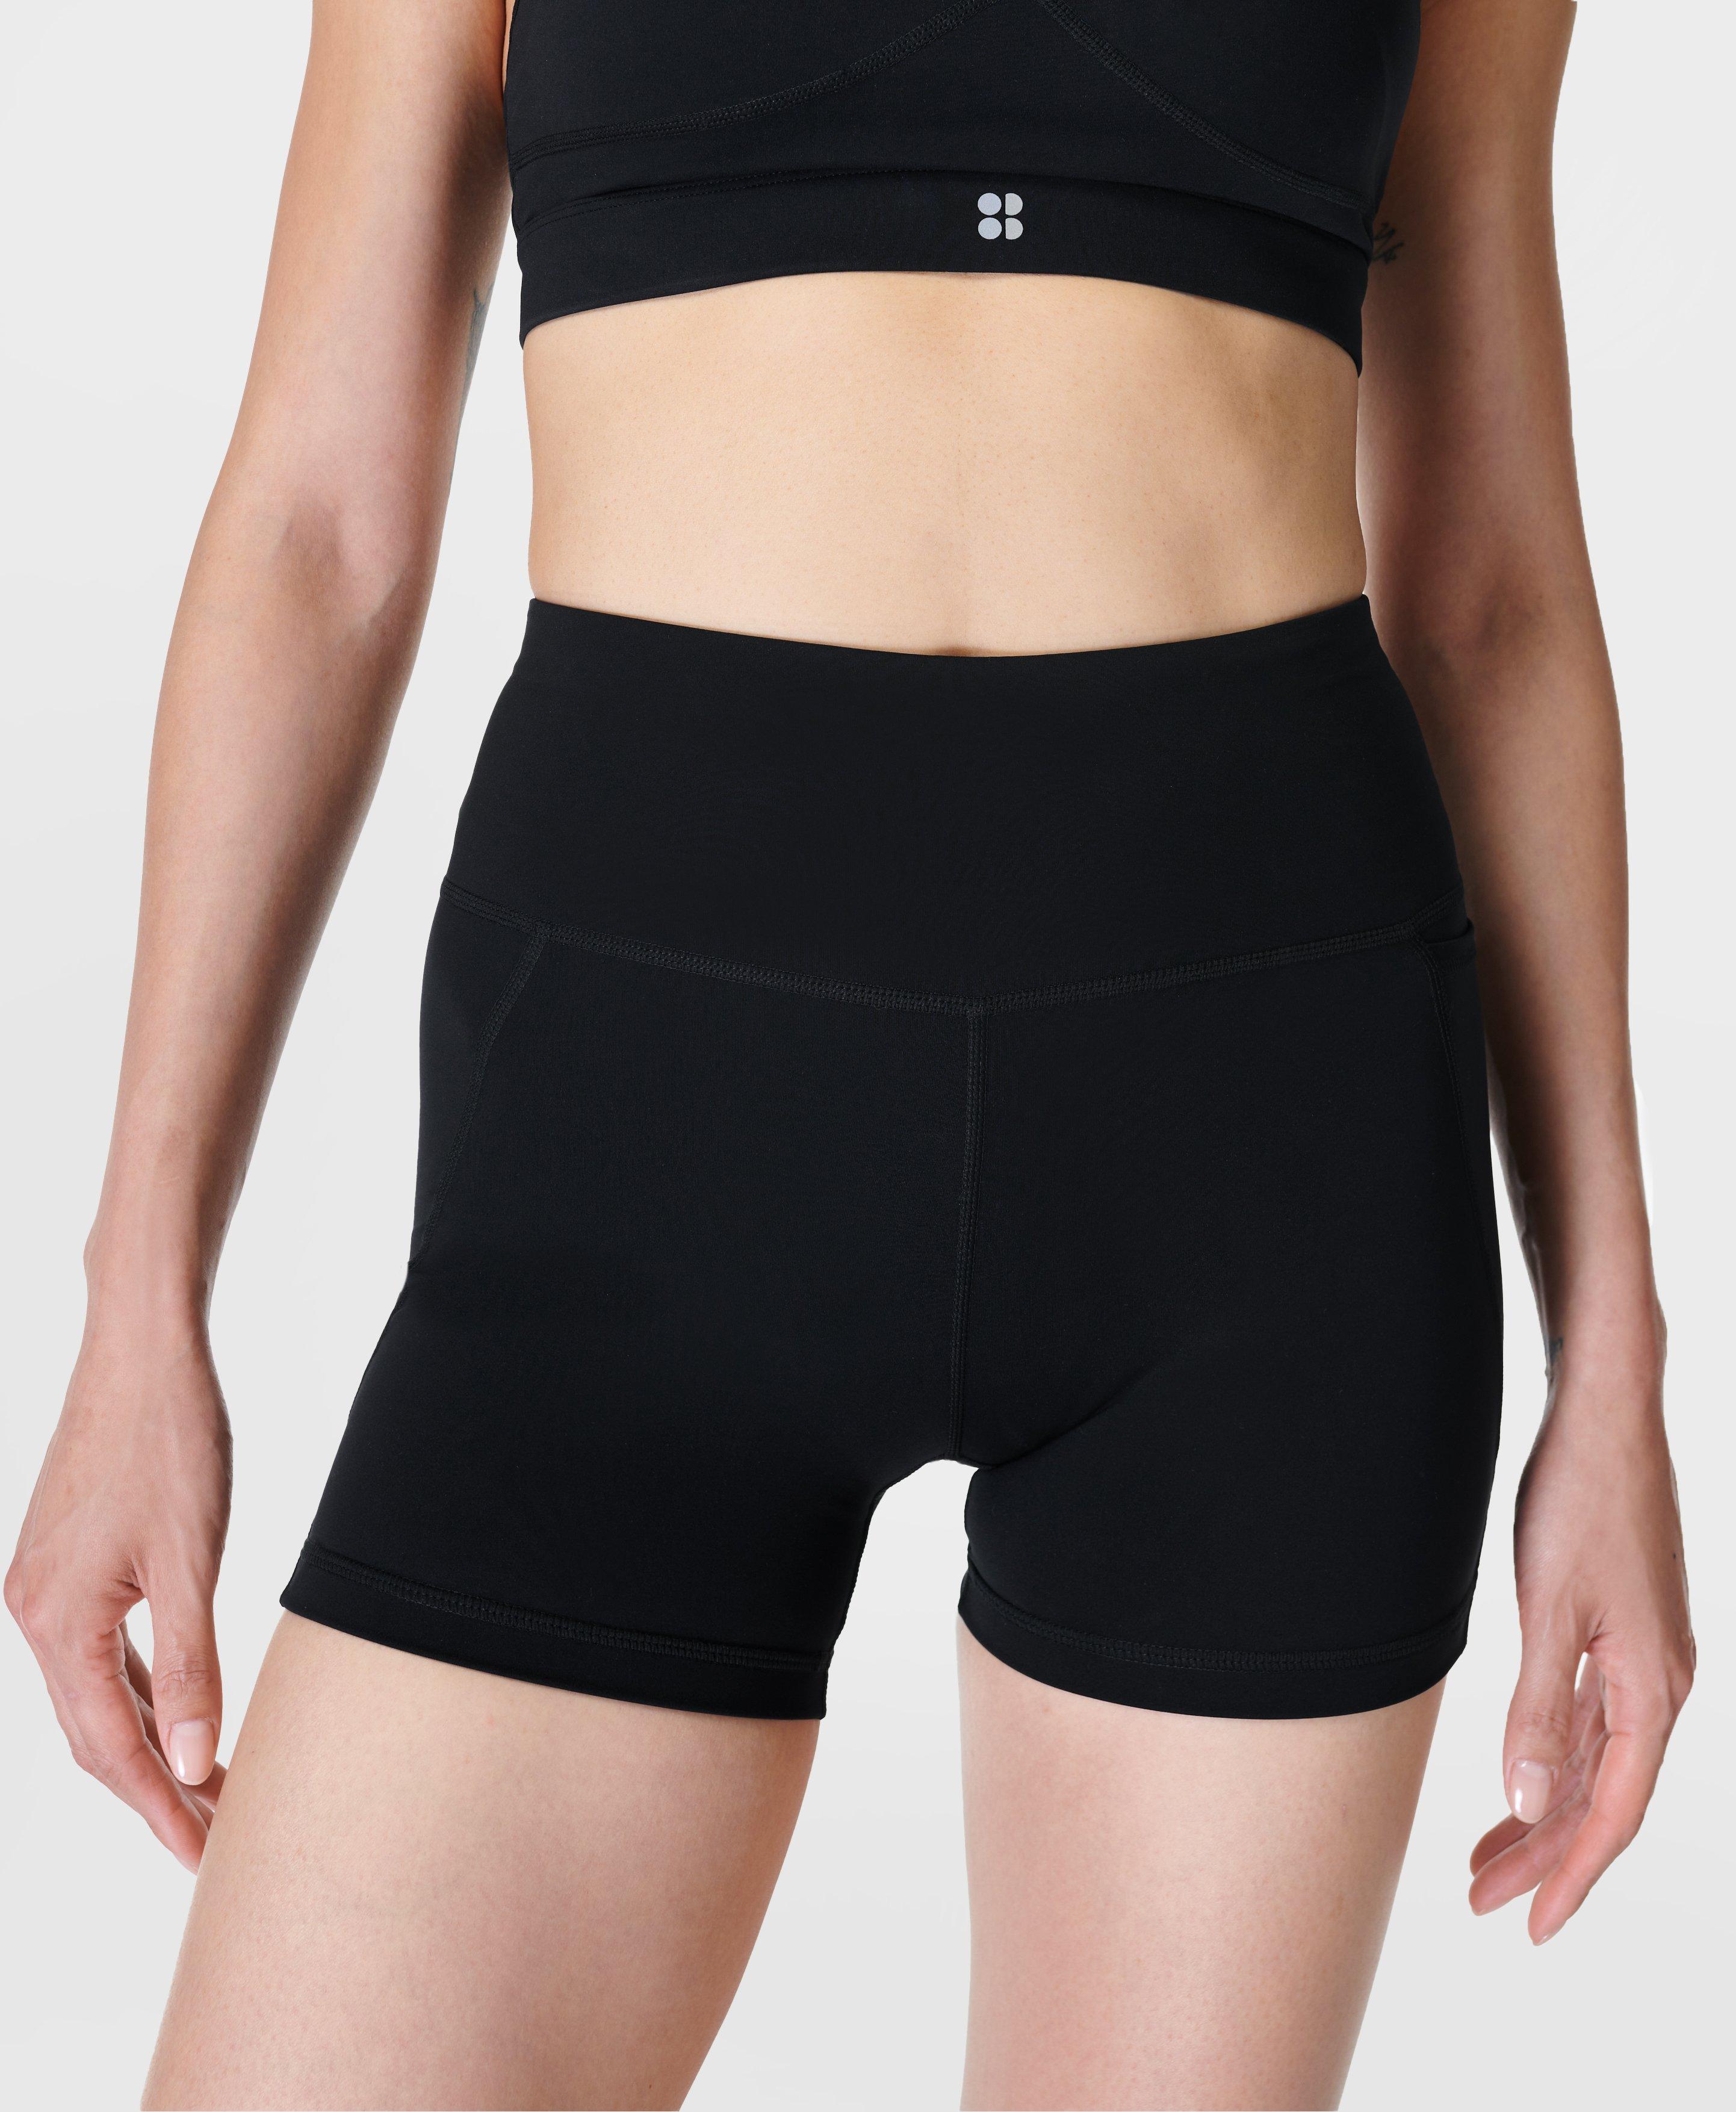 Power 4 Cycling Shorts - Black, Women's Shorts + Skorts